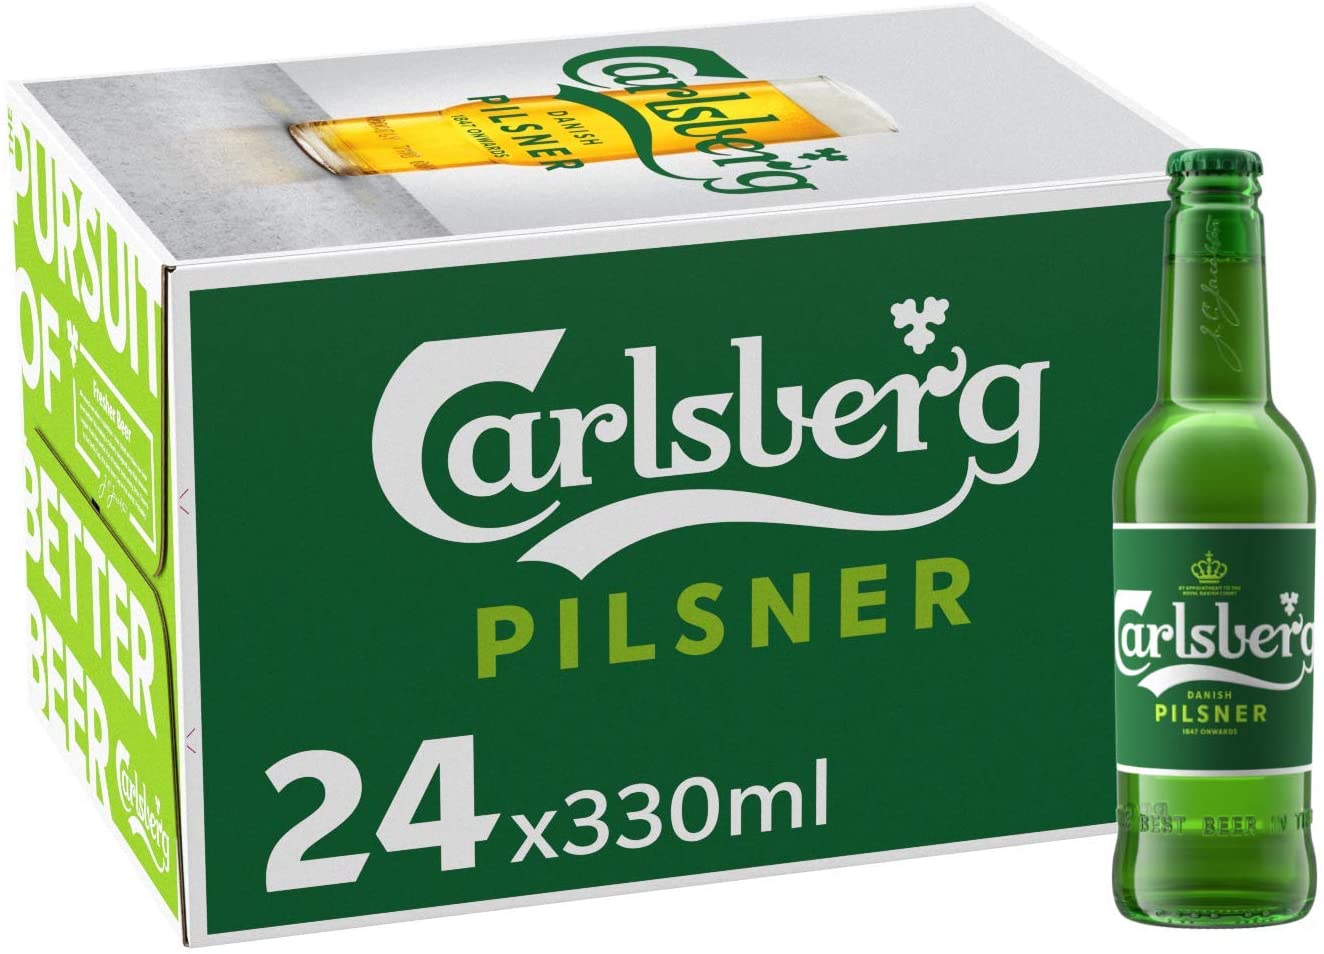 Cerveza CARSLBERG -24 Pack- Cerveza Artesanal- ES